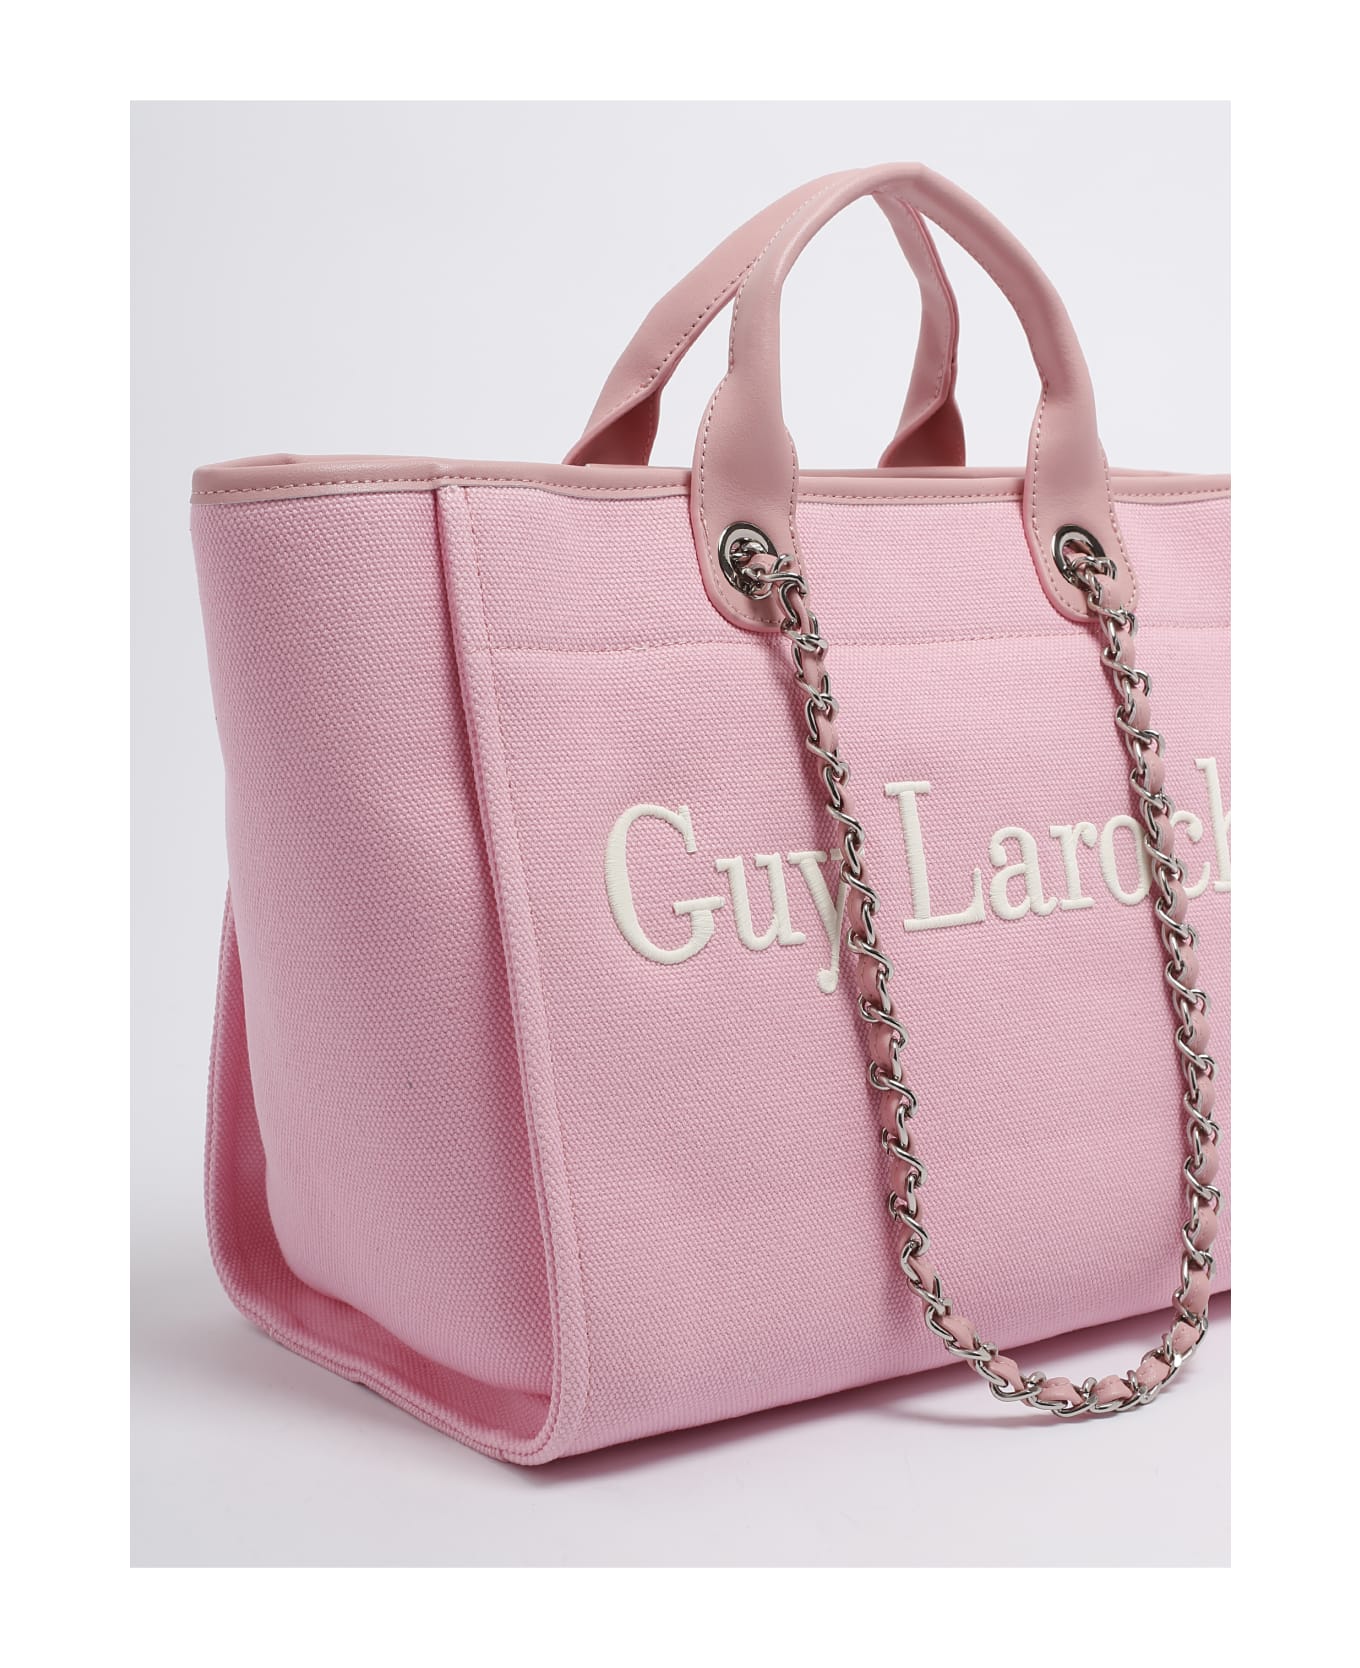 Guy Laroche Corinne Large Shopping Bag - ROSA